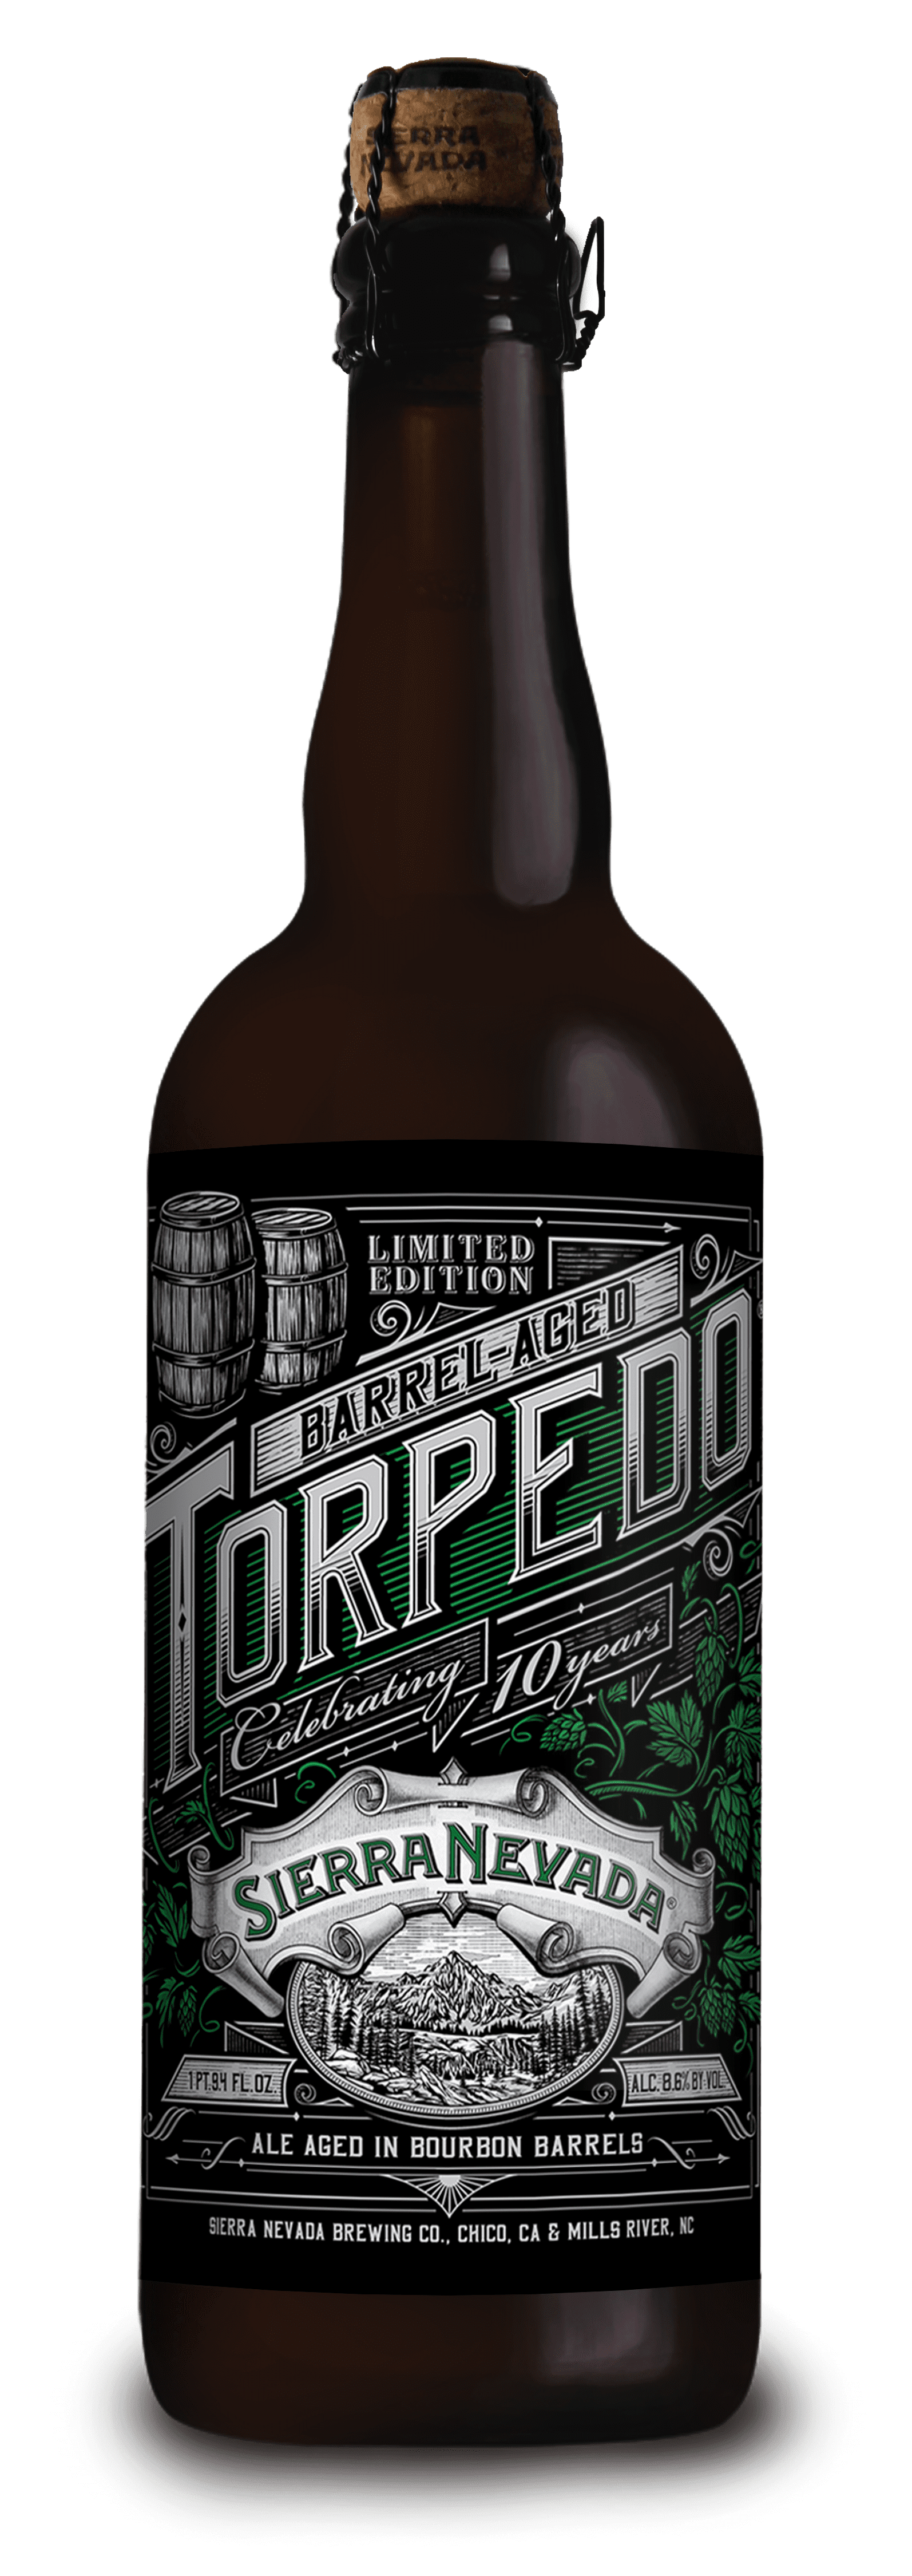 Barrel-Aged Torpedo bottle